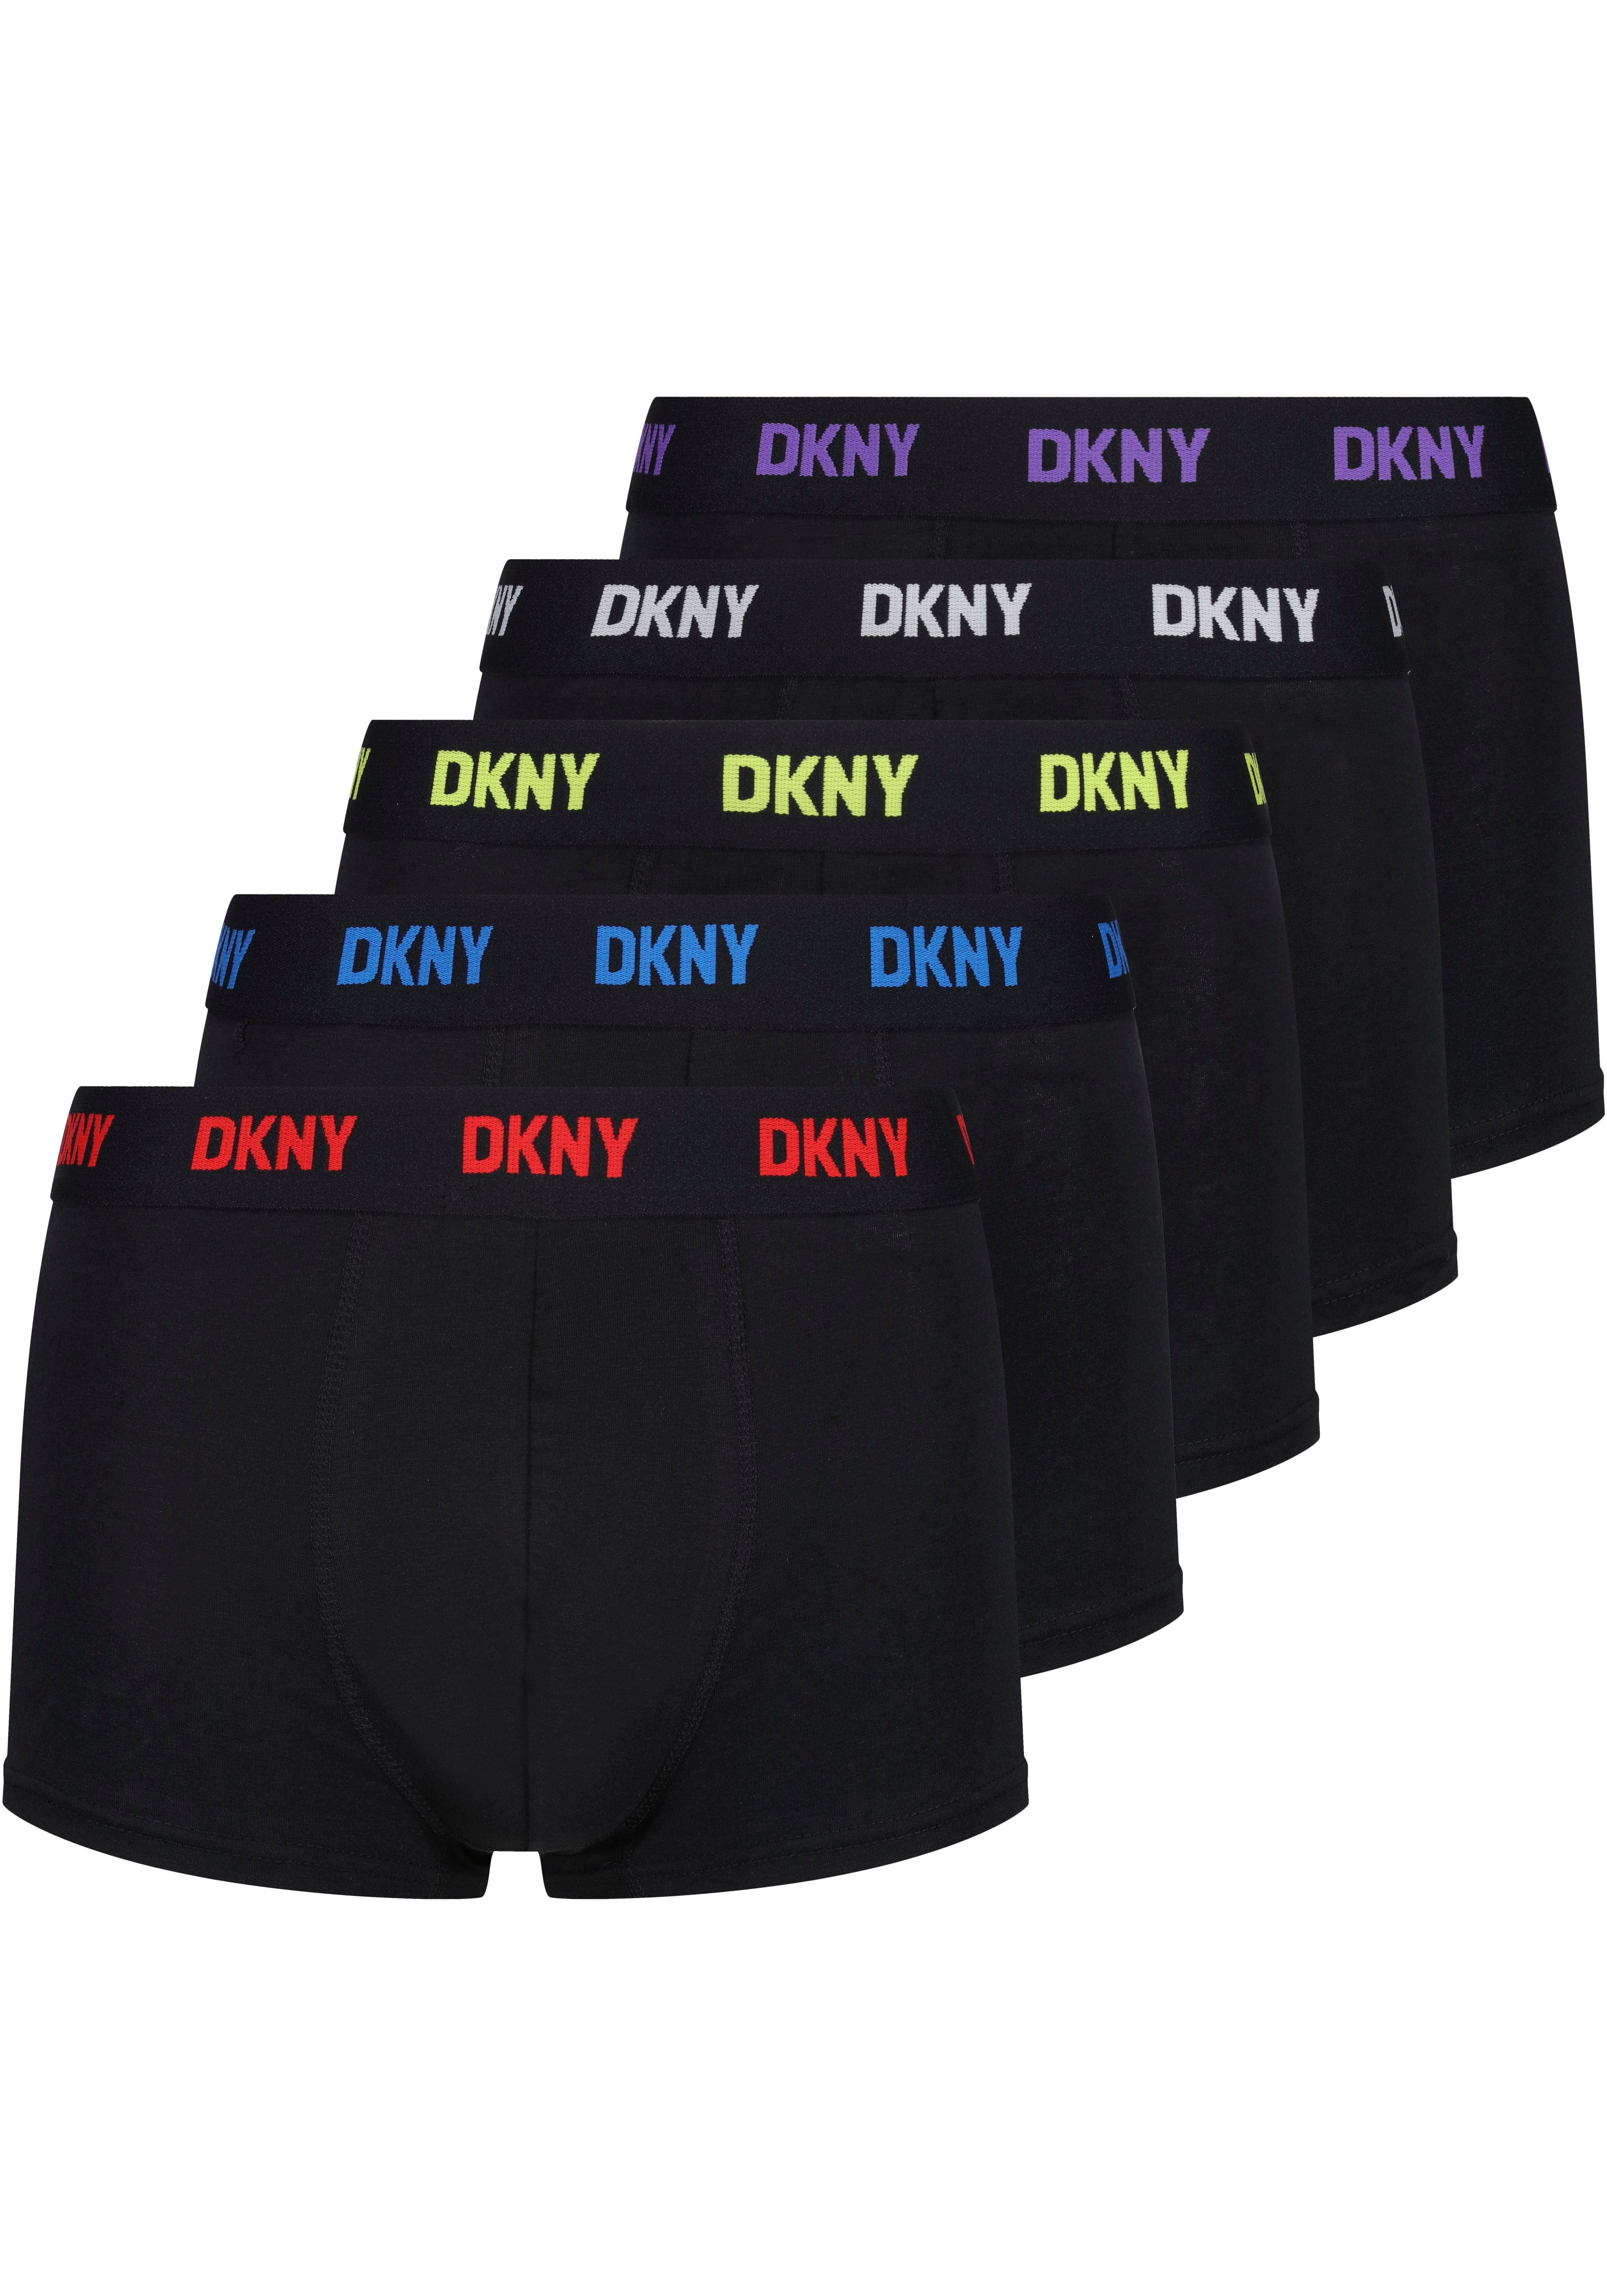 DKNY SCOTTSDALE Trunk